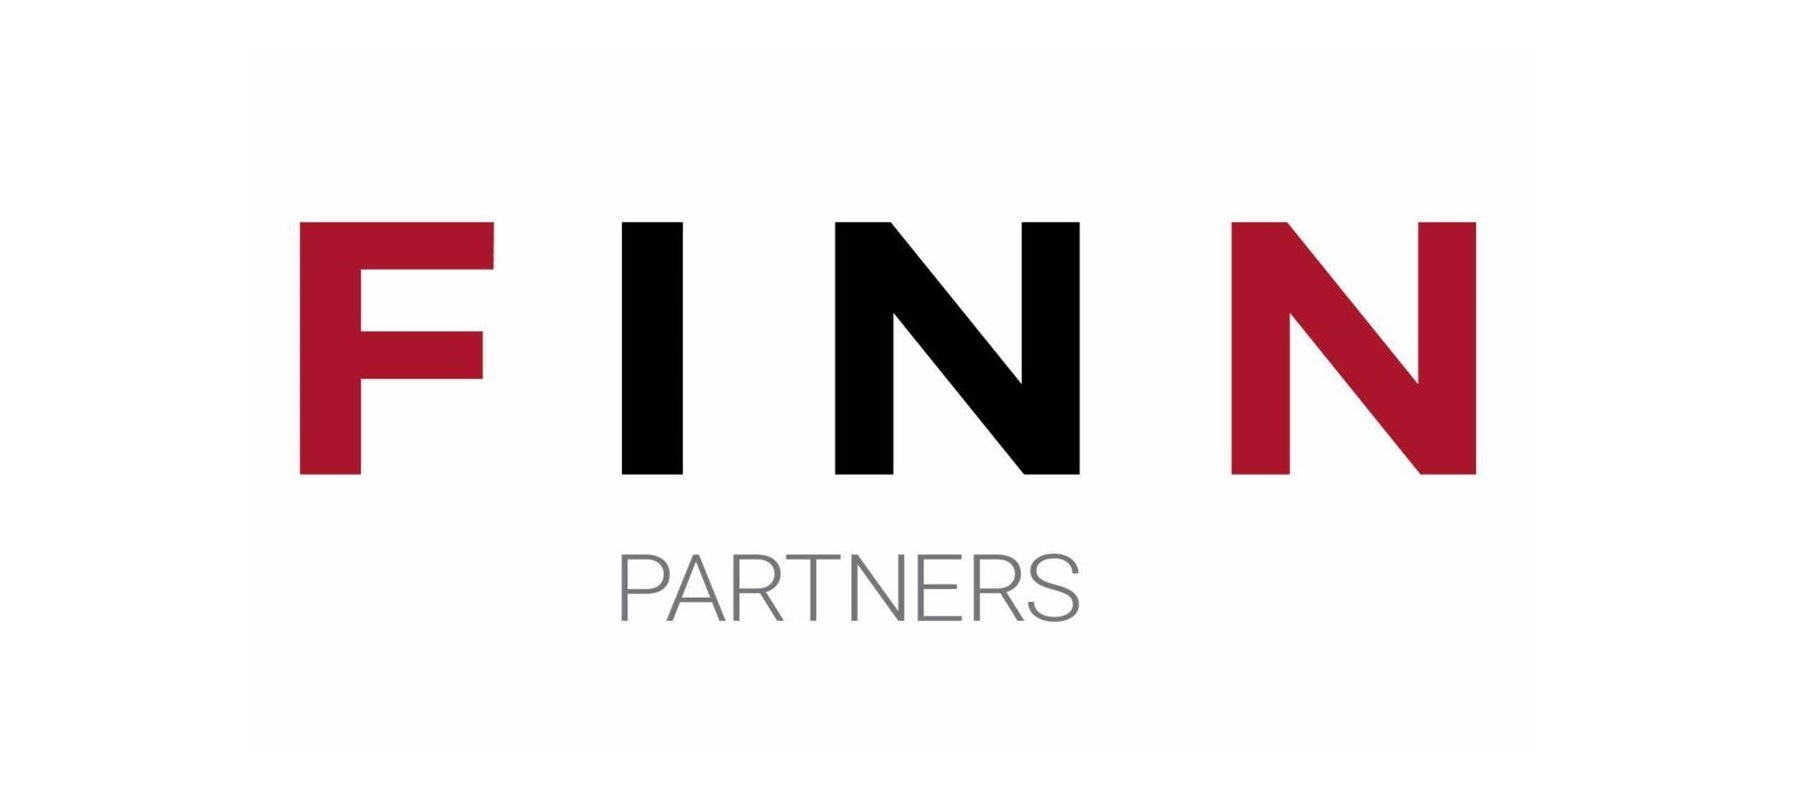 Communications agency FINN Partners announces leadership changes